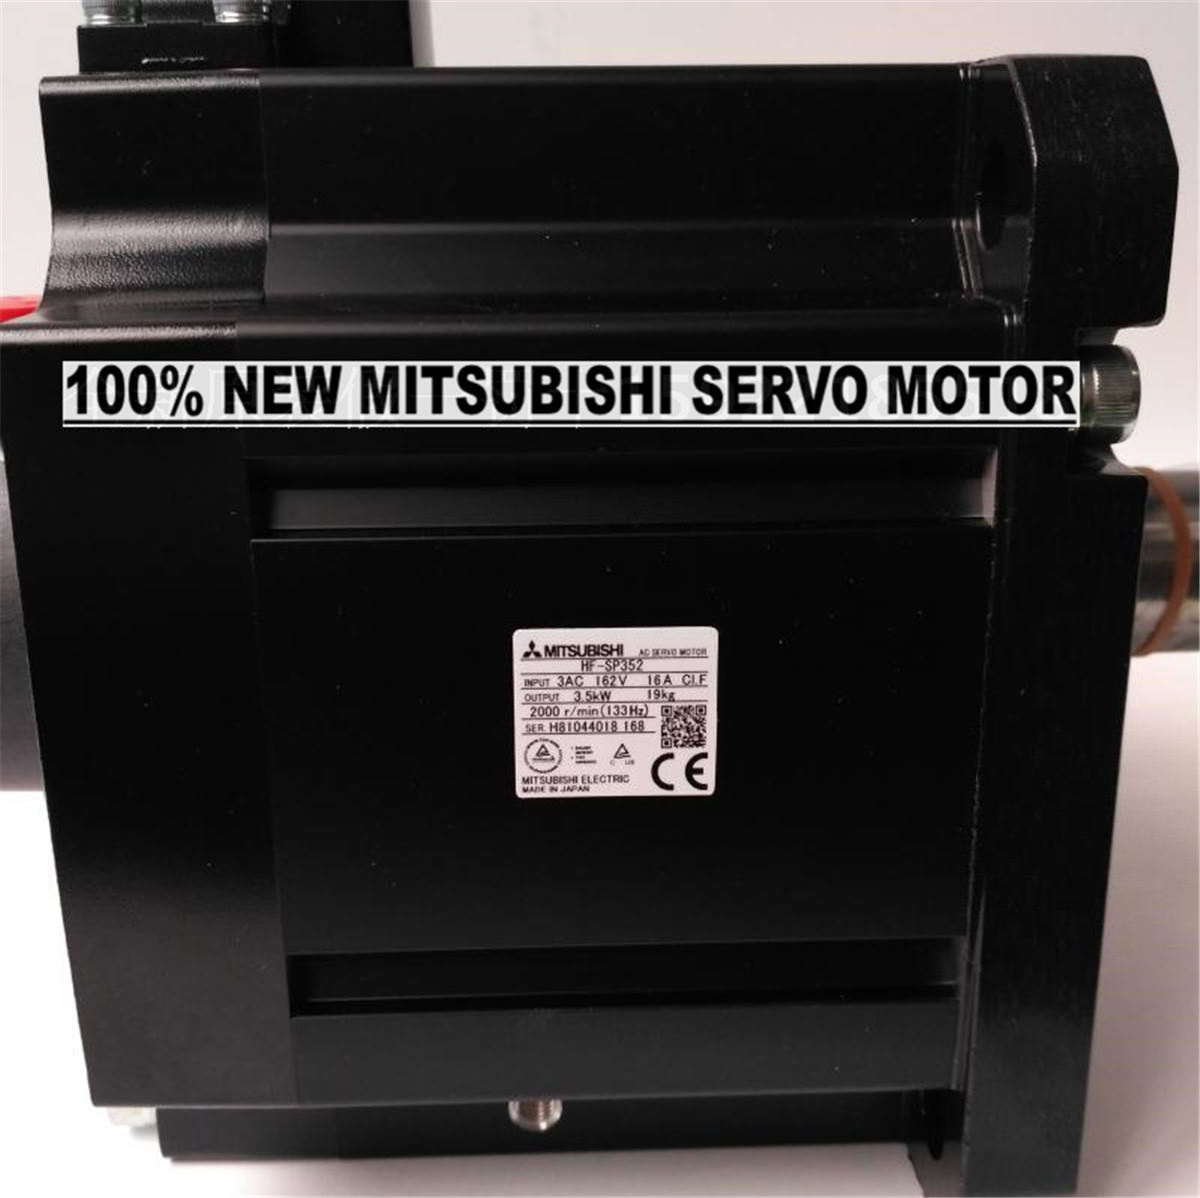 Brand NEW Mitsubishi Servo Motor HF-SP352 in box HFSP352 - Click Image to Close